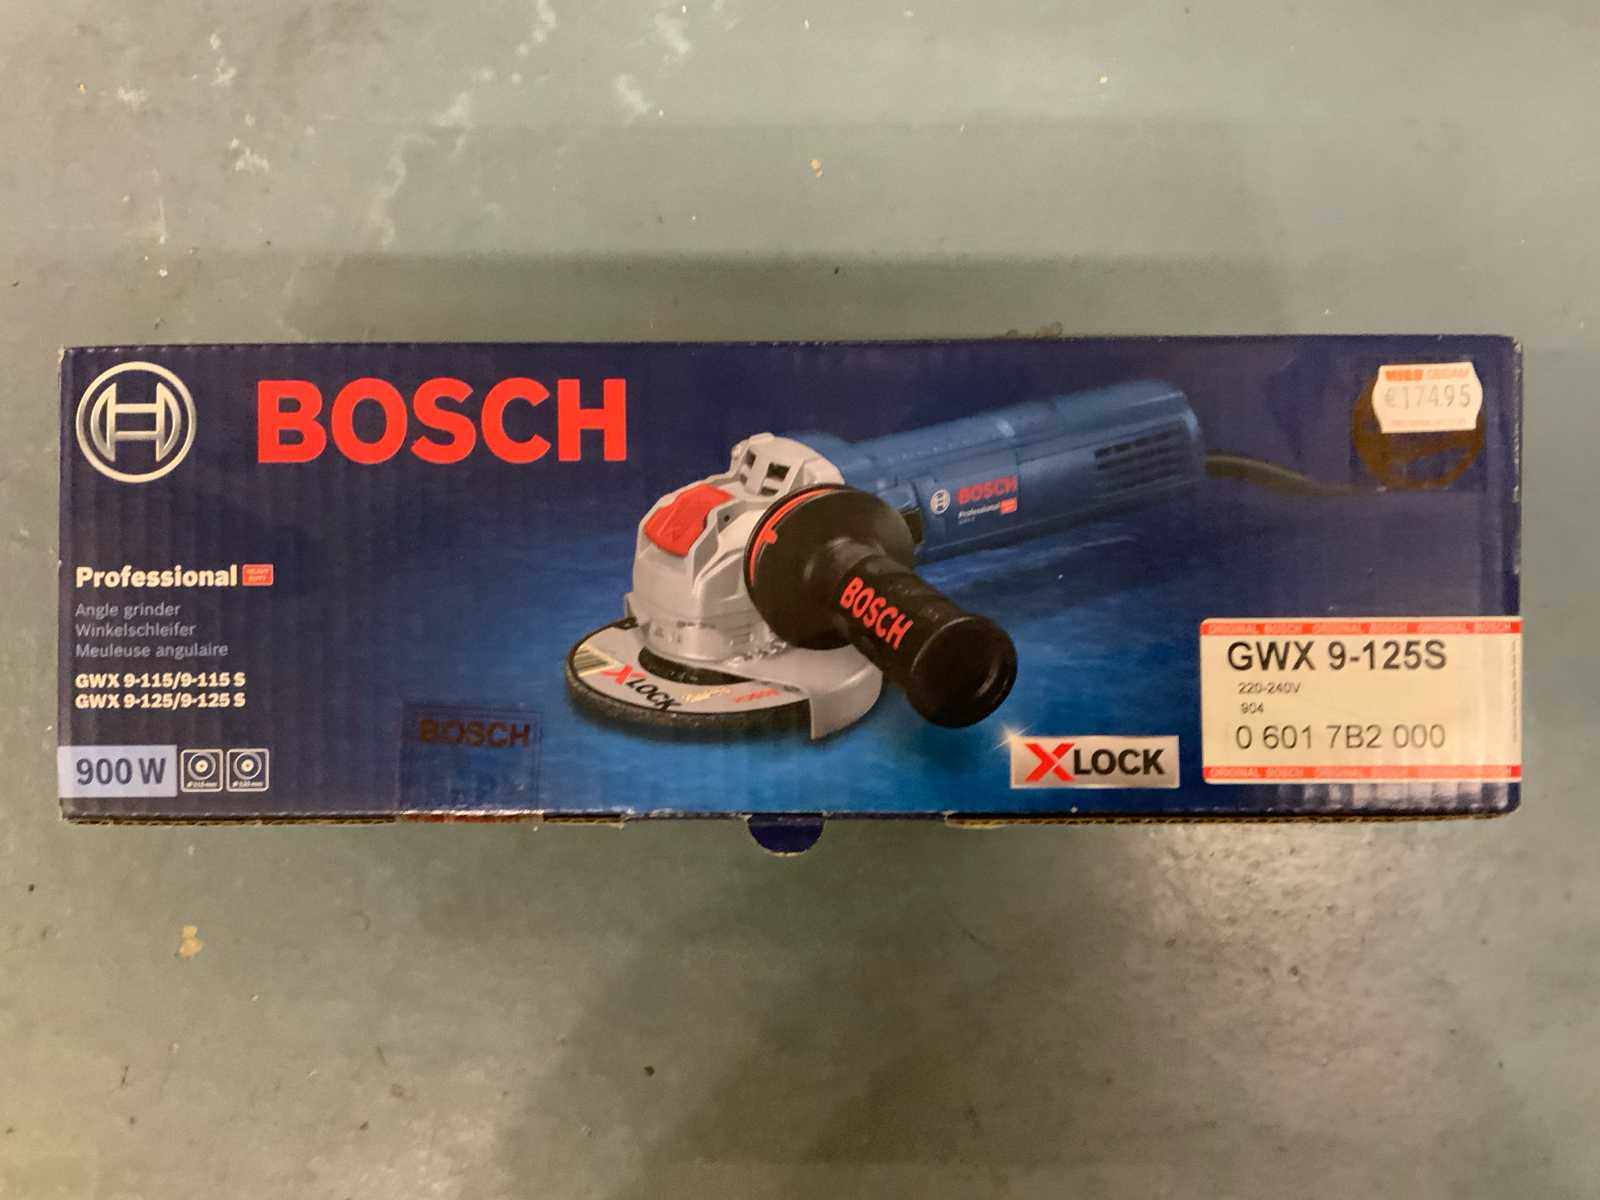 grinder | Bosch Troostwijk Auctions GWX Angle 9-125S